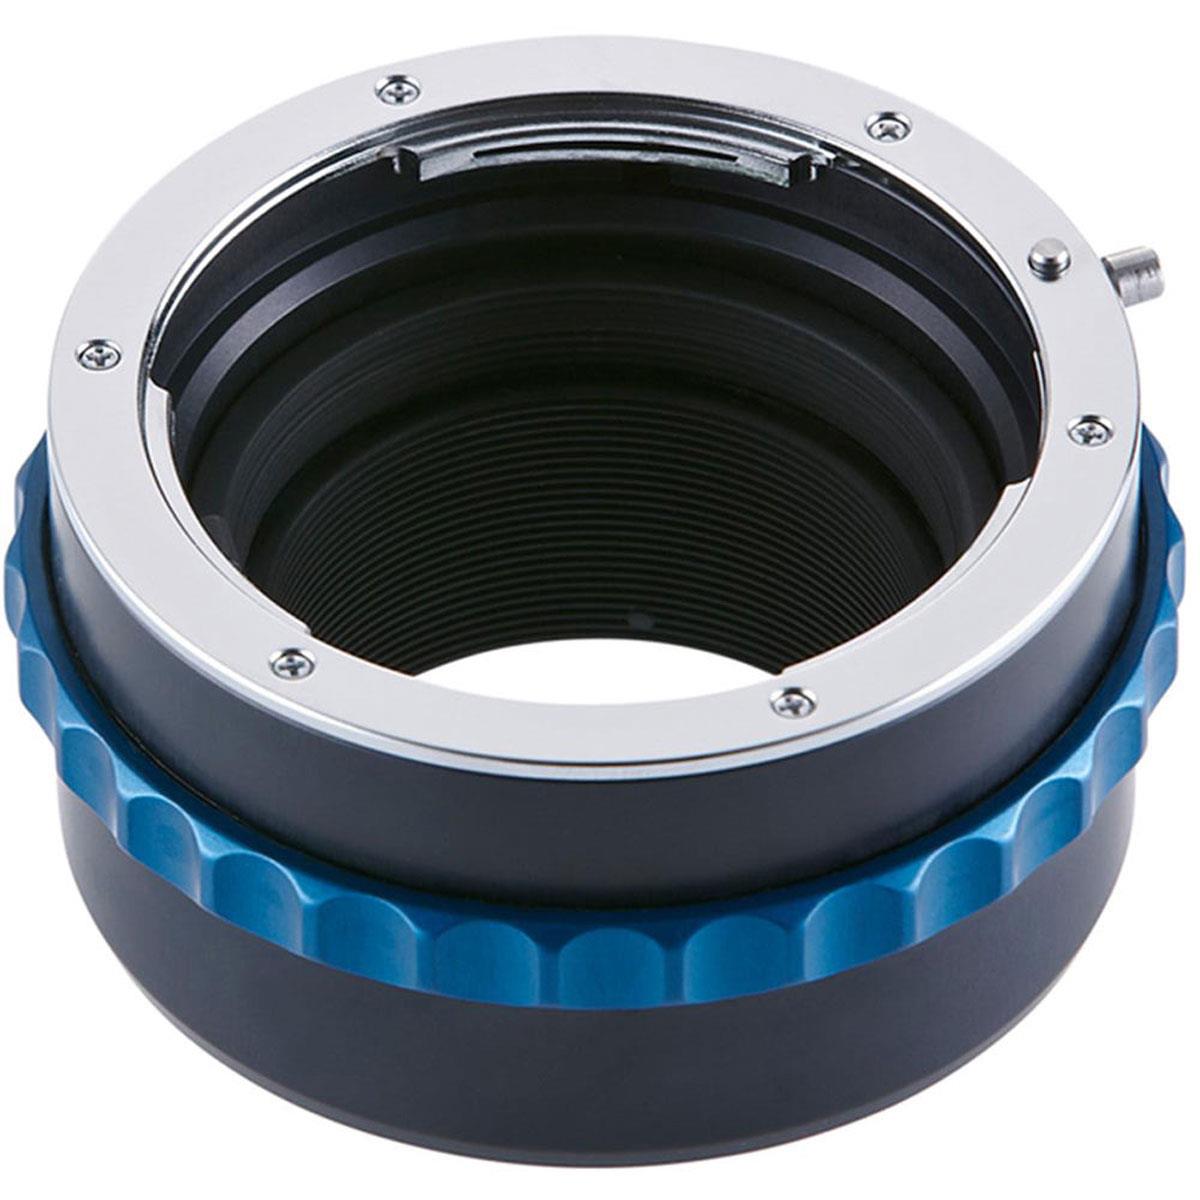 Image of Novoflex Lens Adapter for Nikon F-Lenses to Nikon Z-Mount Cameras